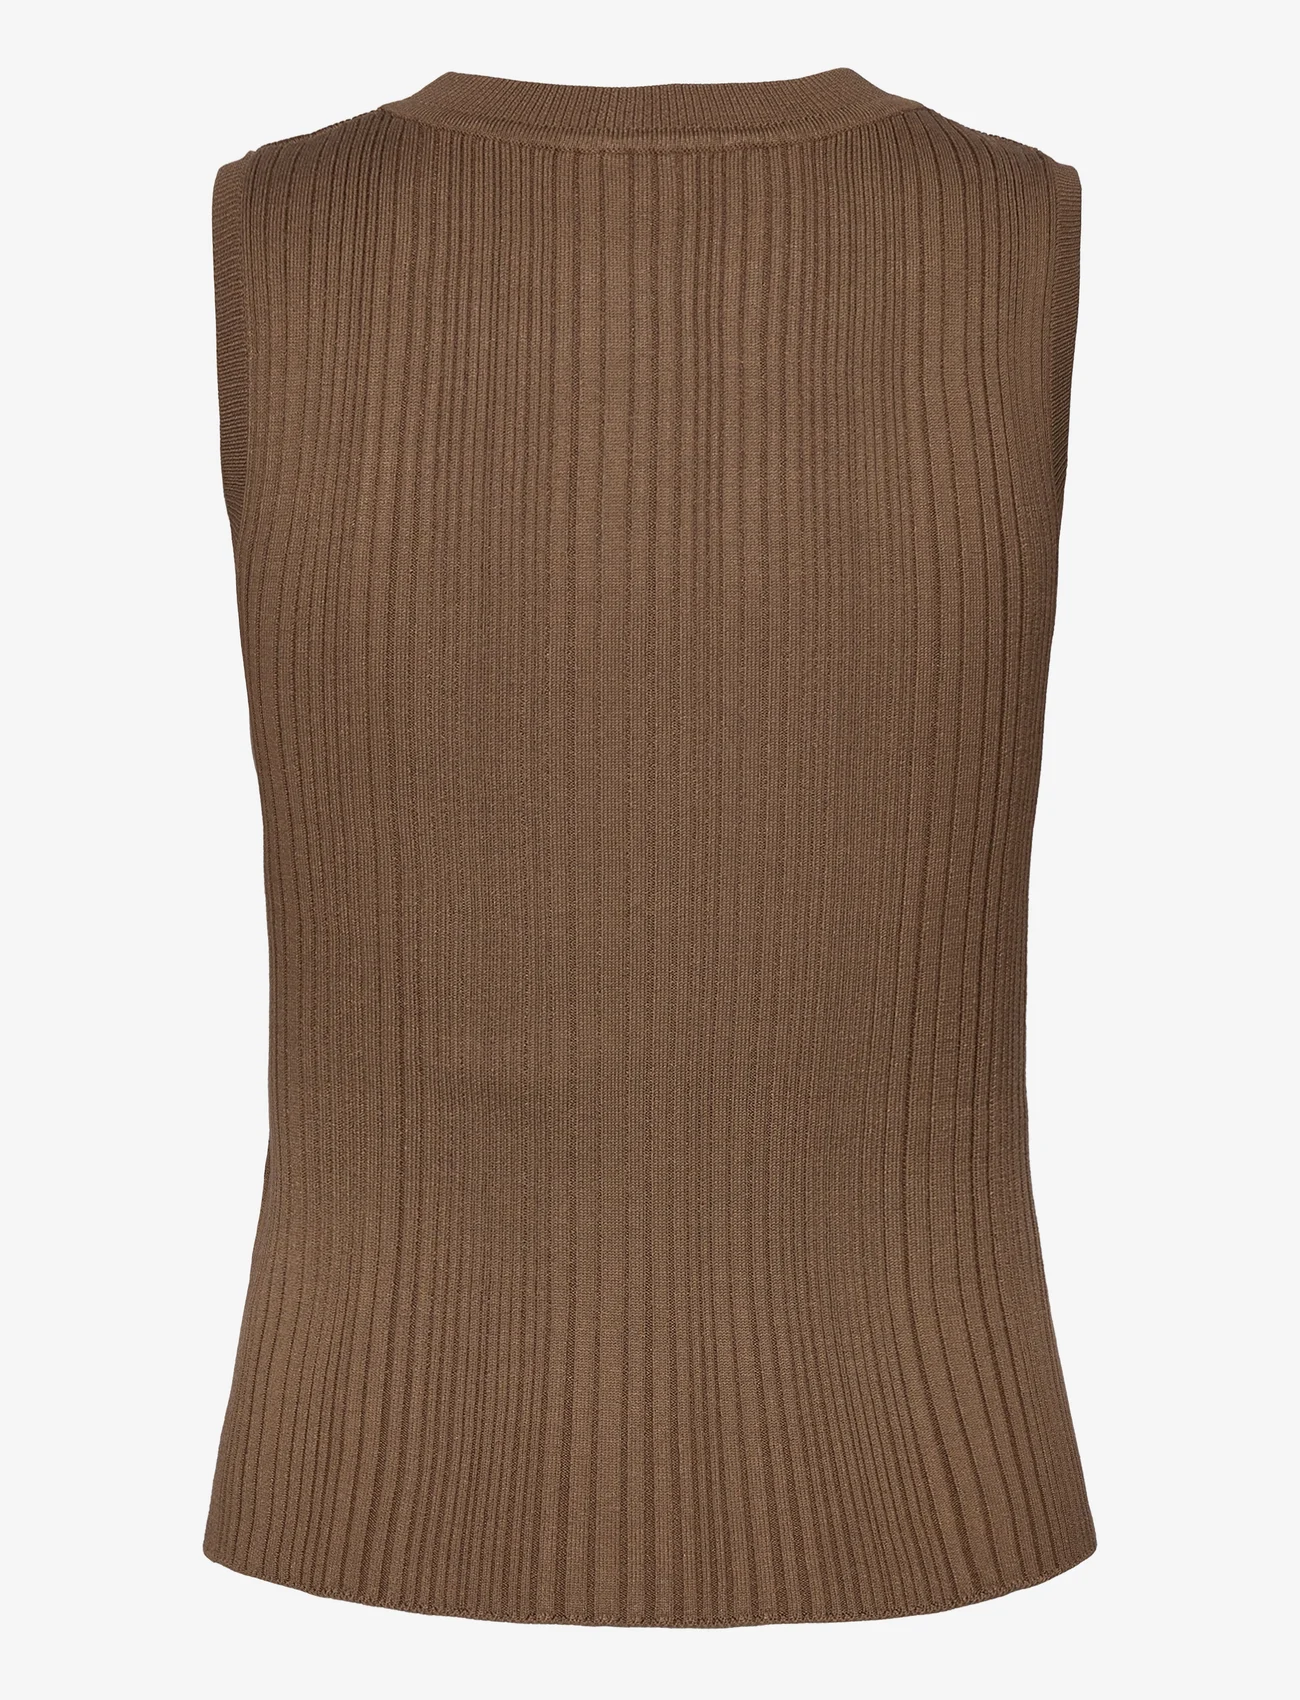 BOSS - Felishia - knitted vests - open brown - 1